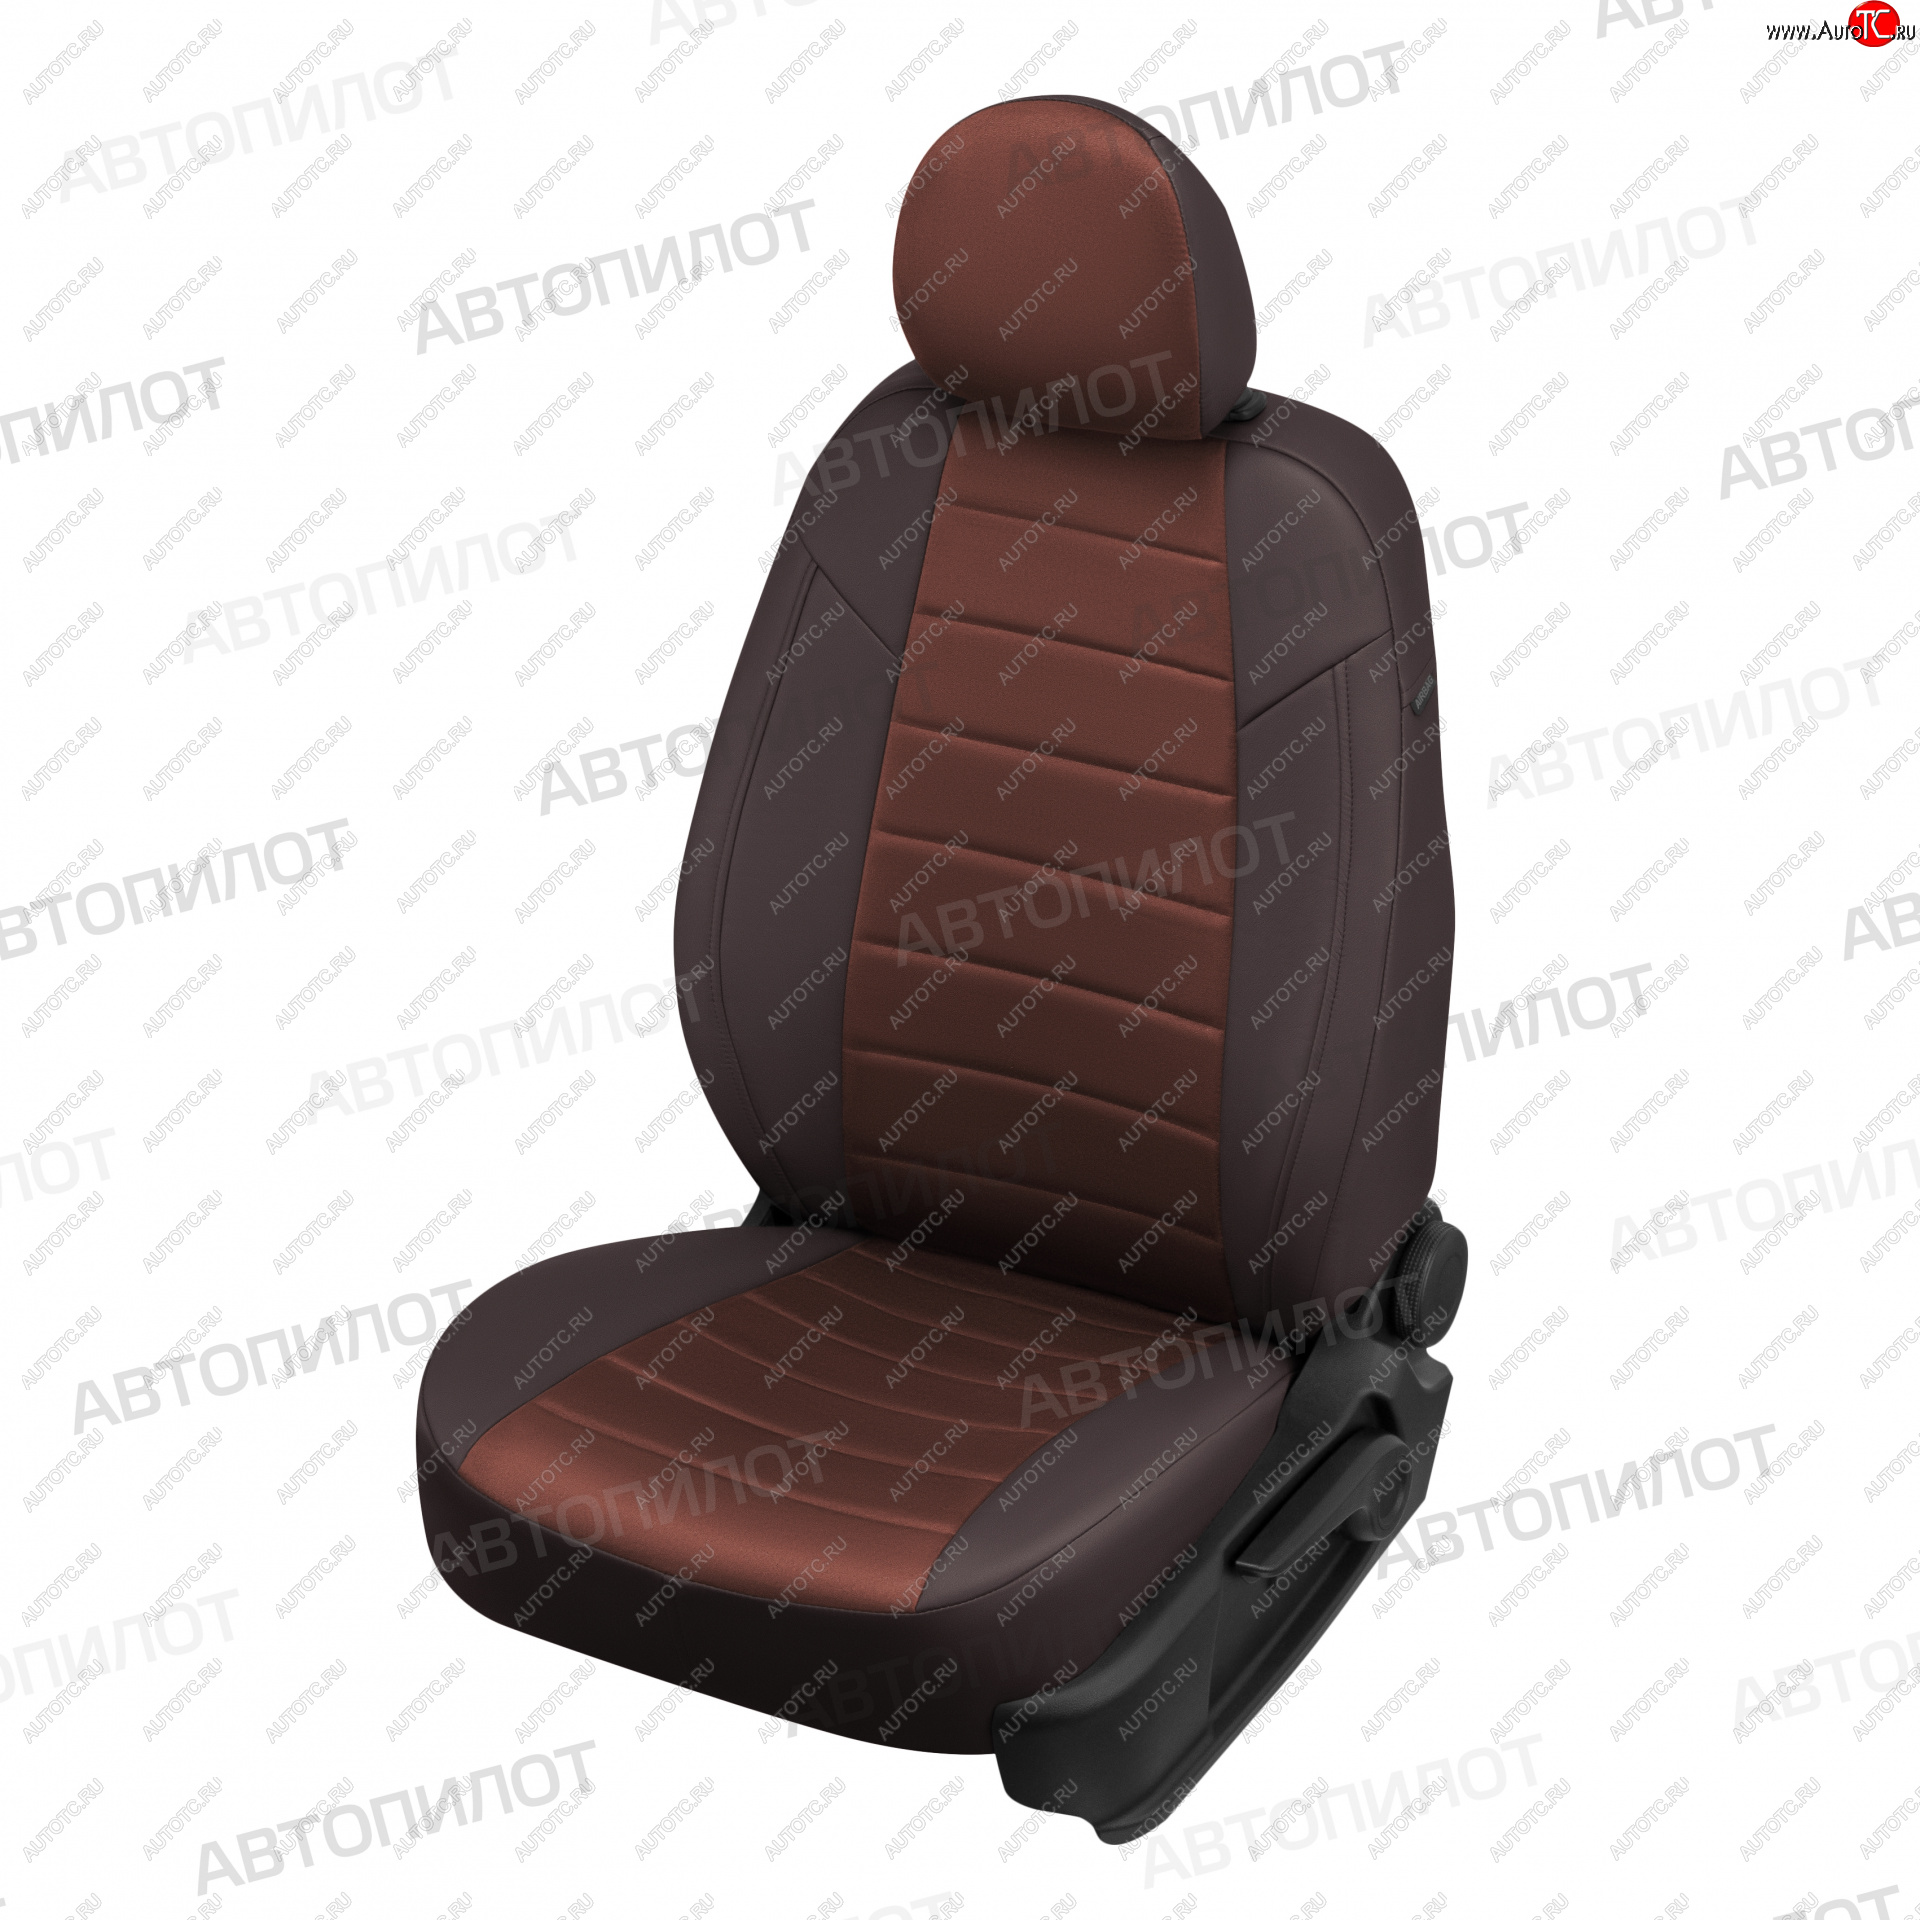 8 299 р. Чехлы сидений (3 места, экокожа/алькантара) Автопилот  Ford Transit  3 (2006-2014) (шоколад)